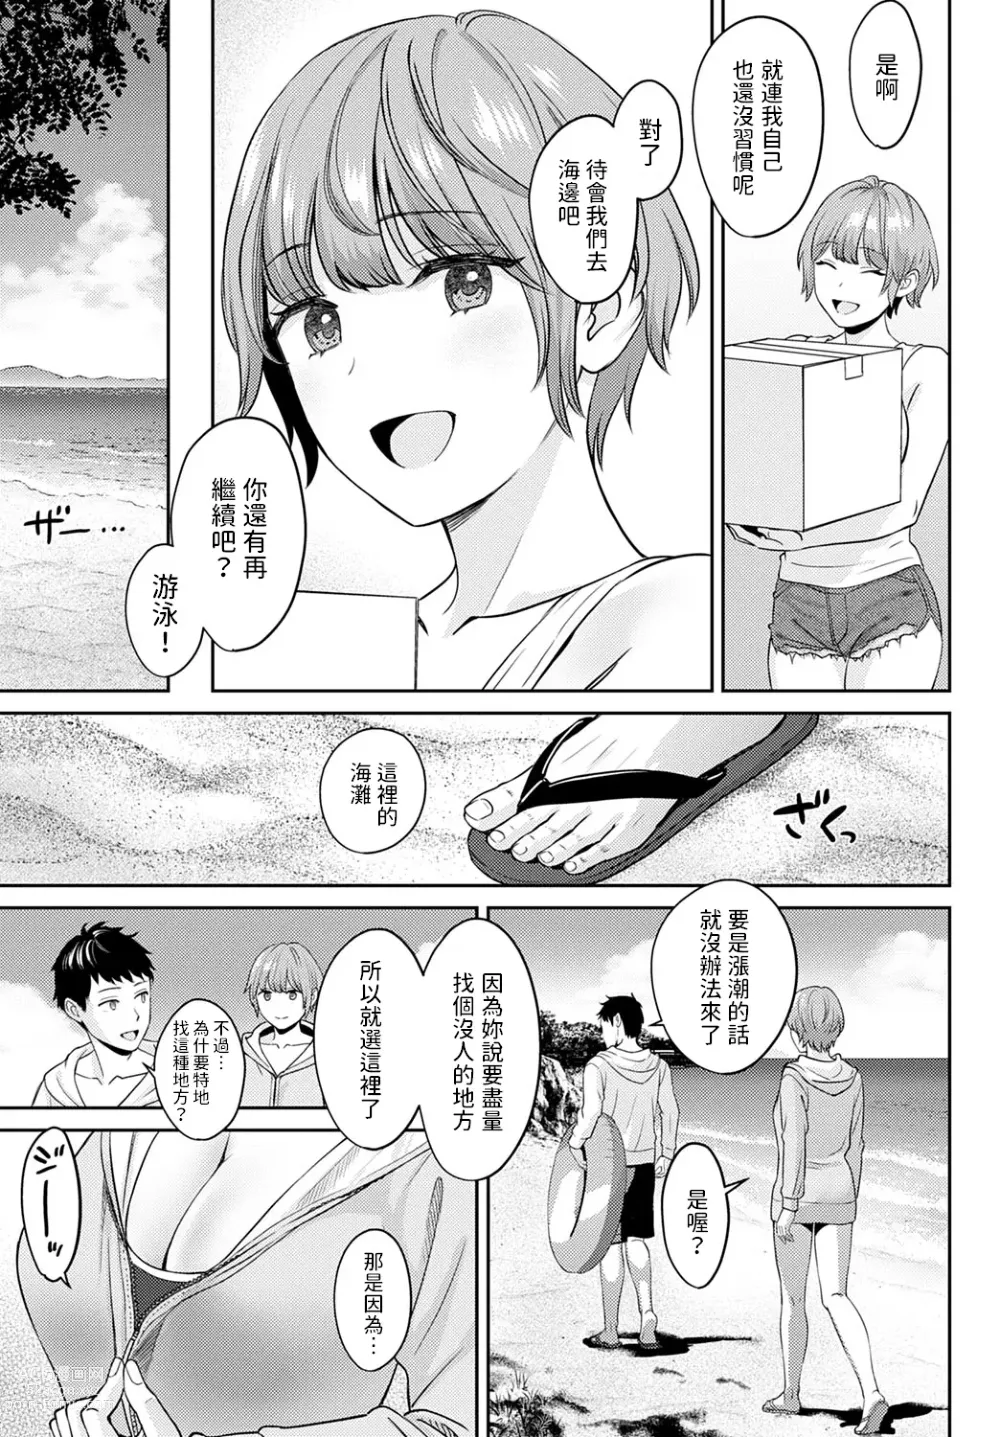 Page 5 of manga Saikai - reunion + restart